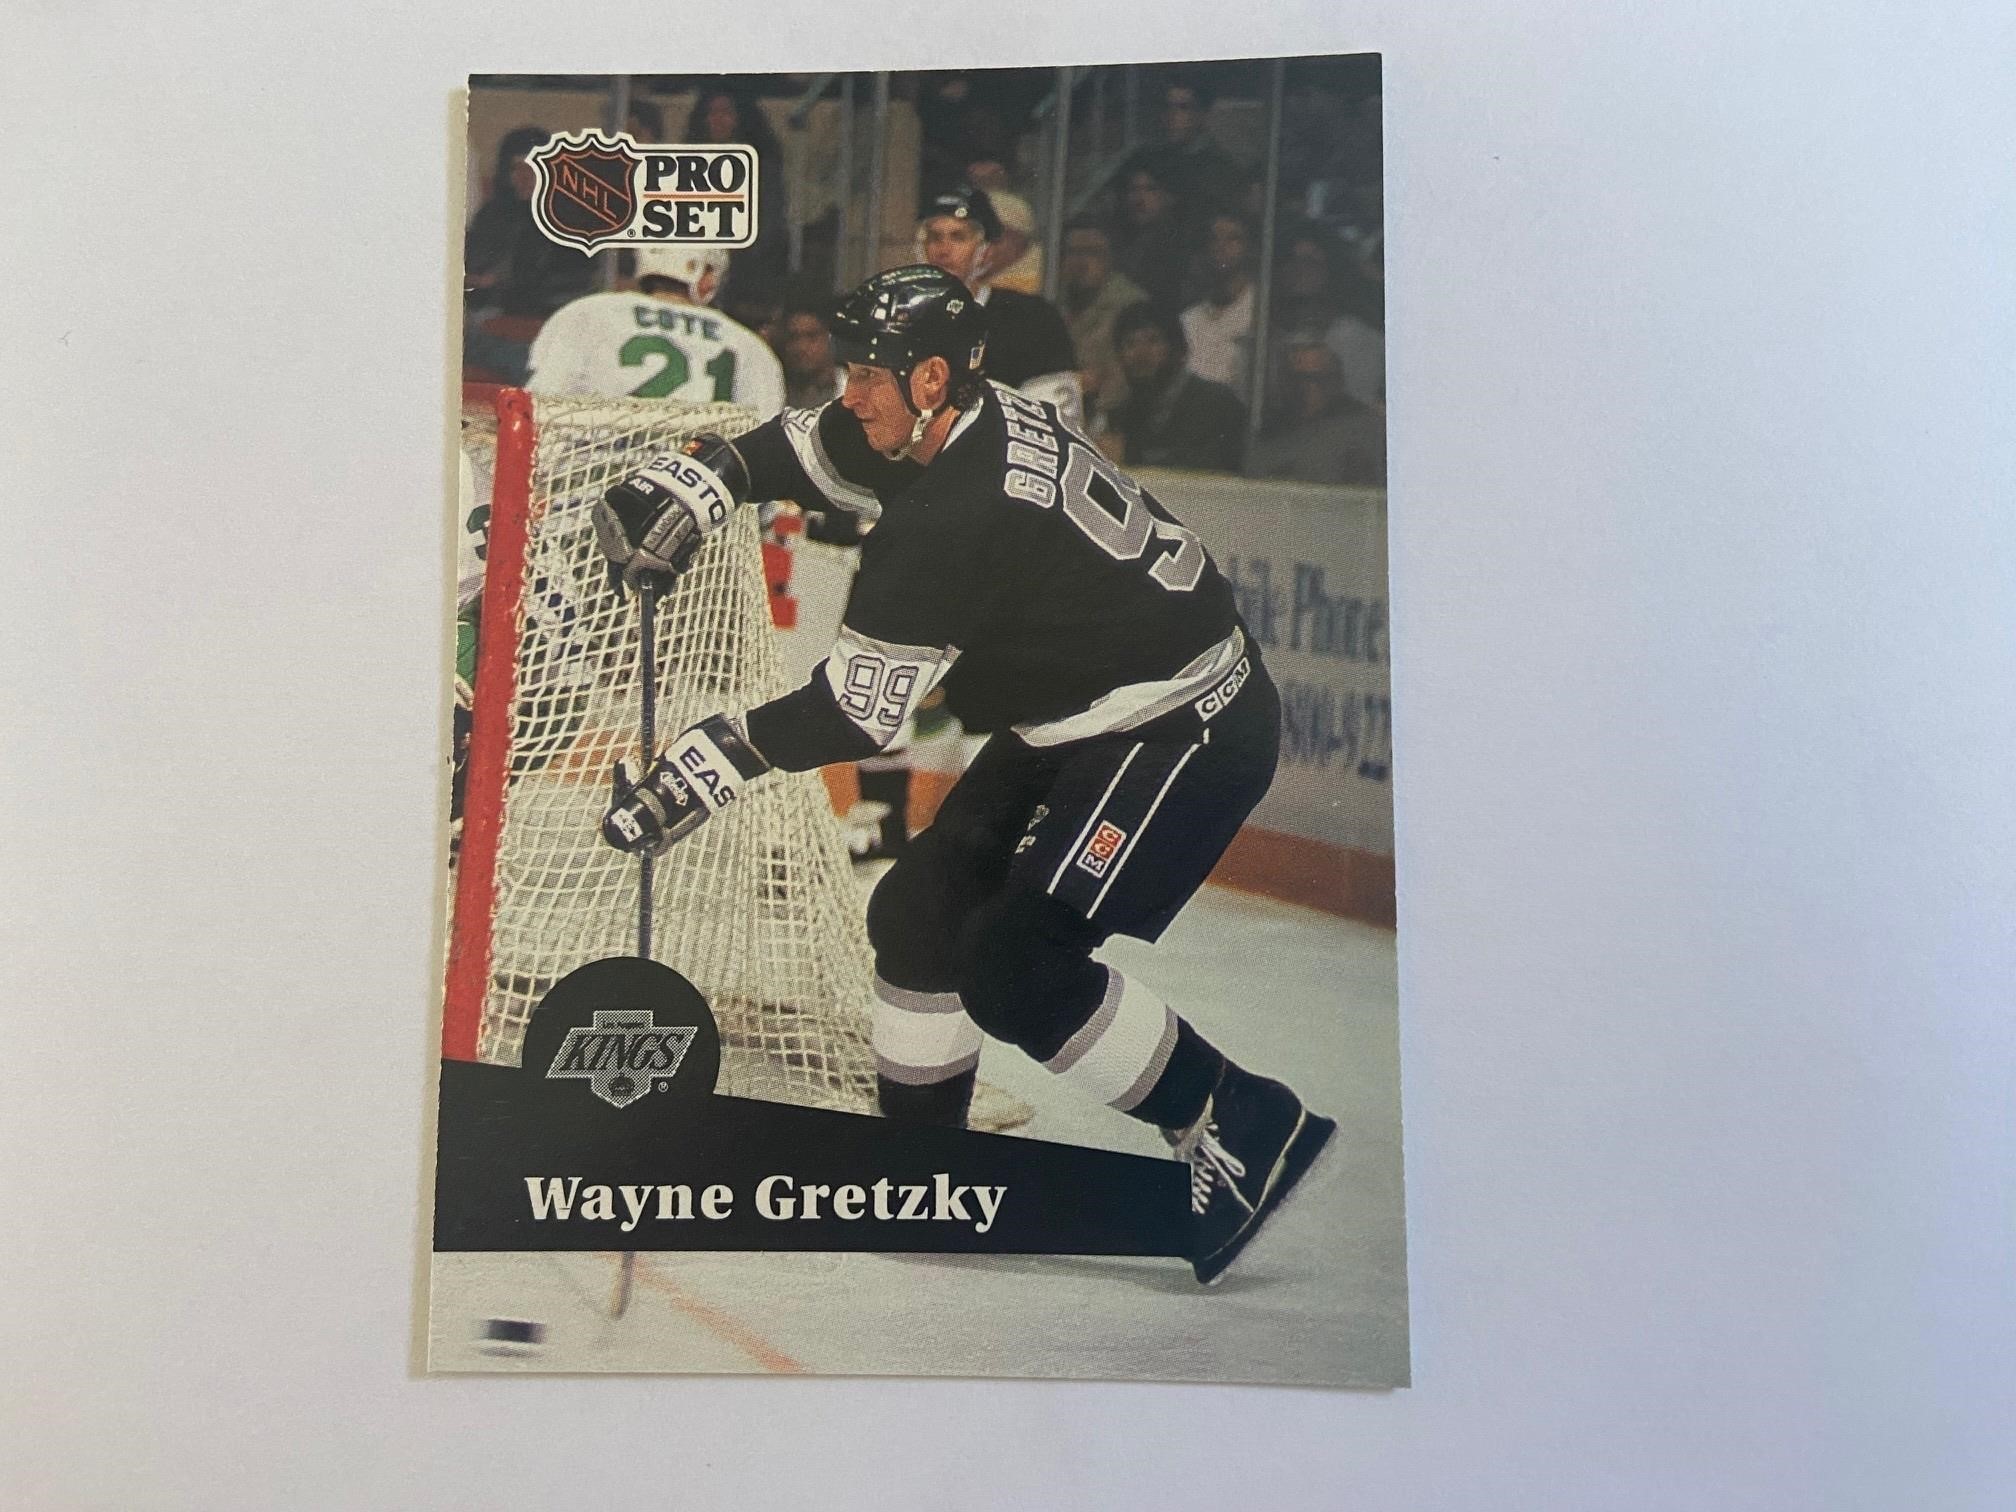 Wayne Gretzky 1991 NHL Pro Set. MINT